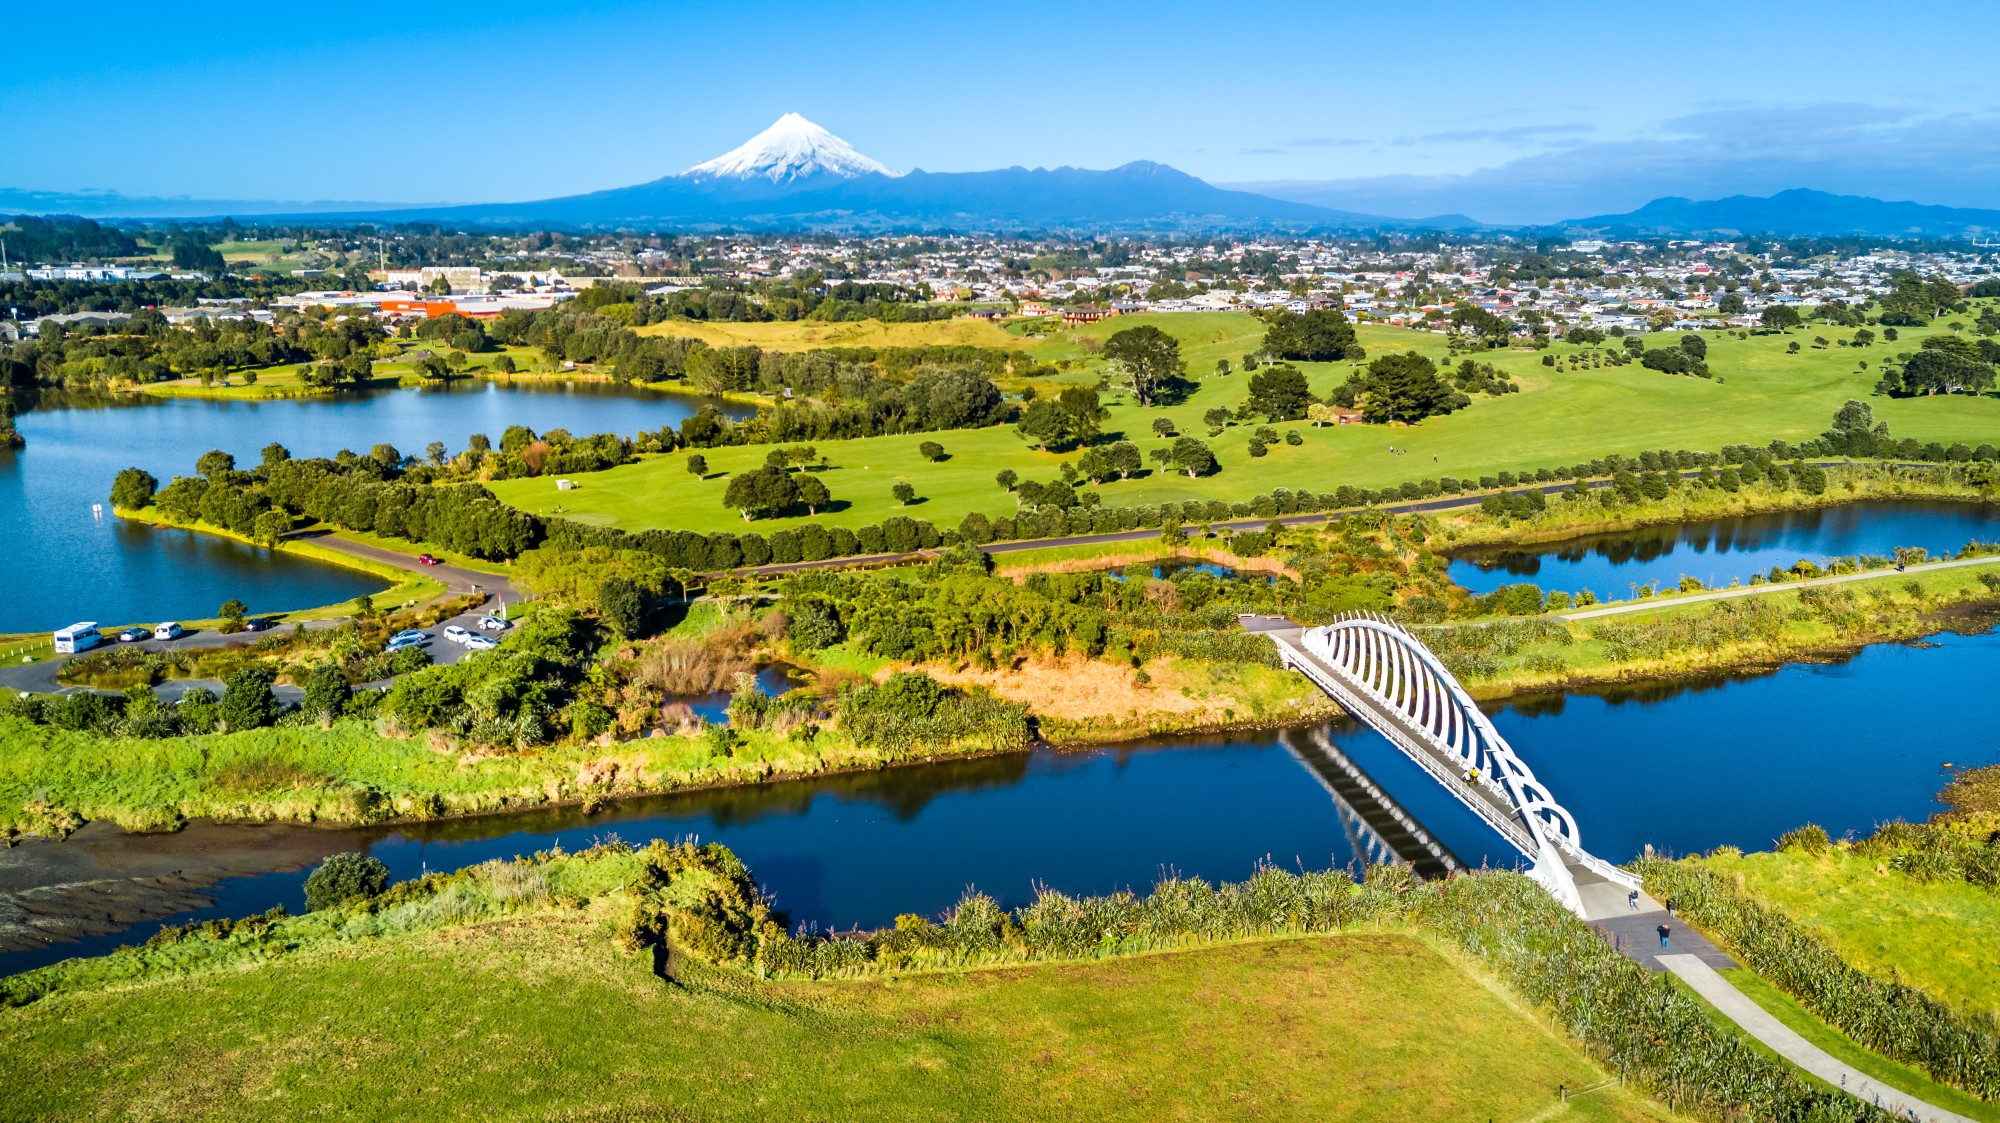 View of the countryside looking over a bridge towards Mount Taranaki, New Zealand